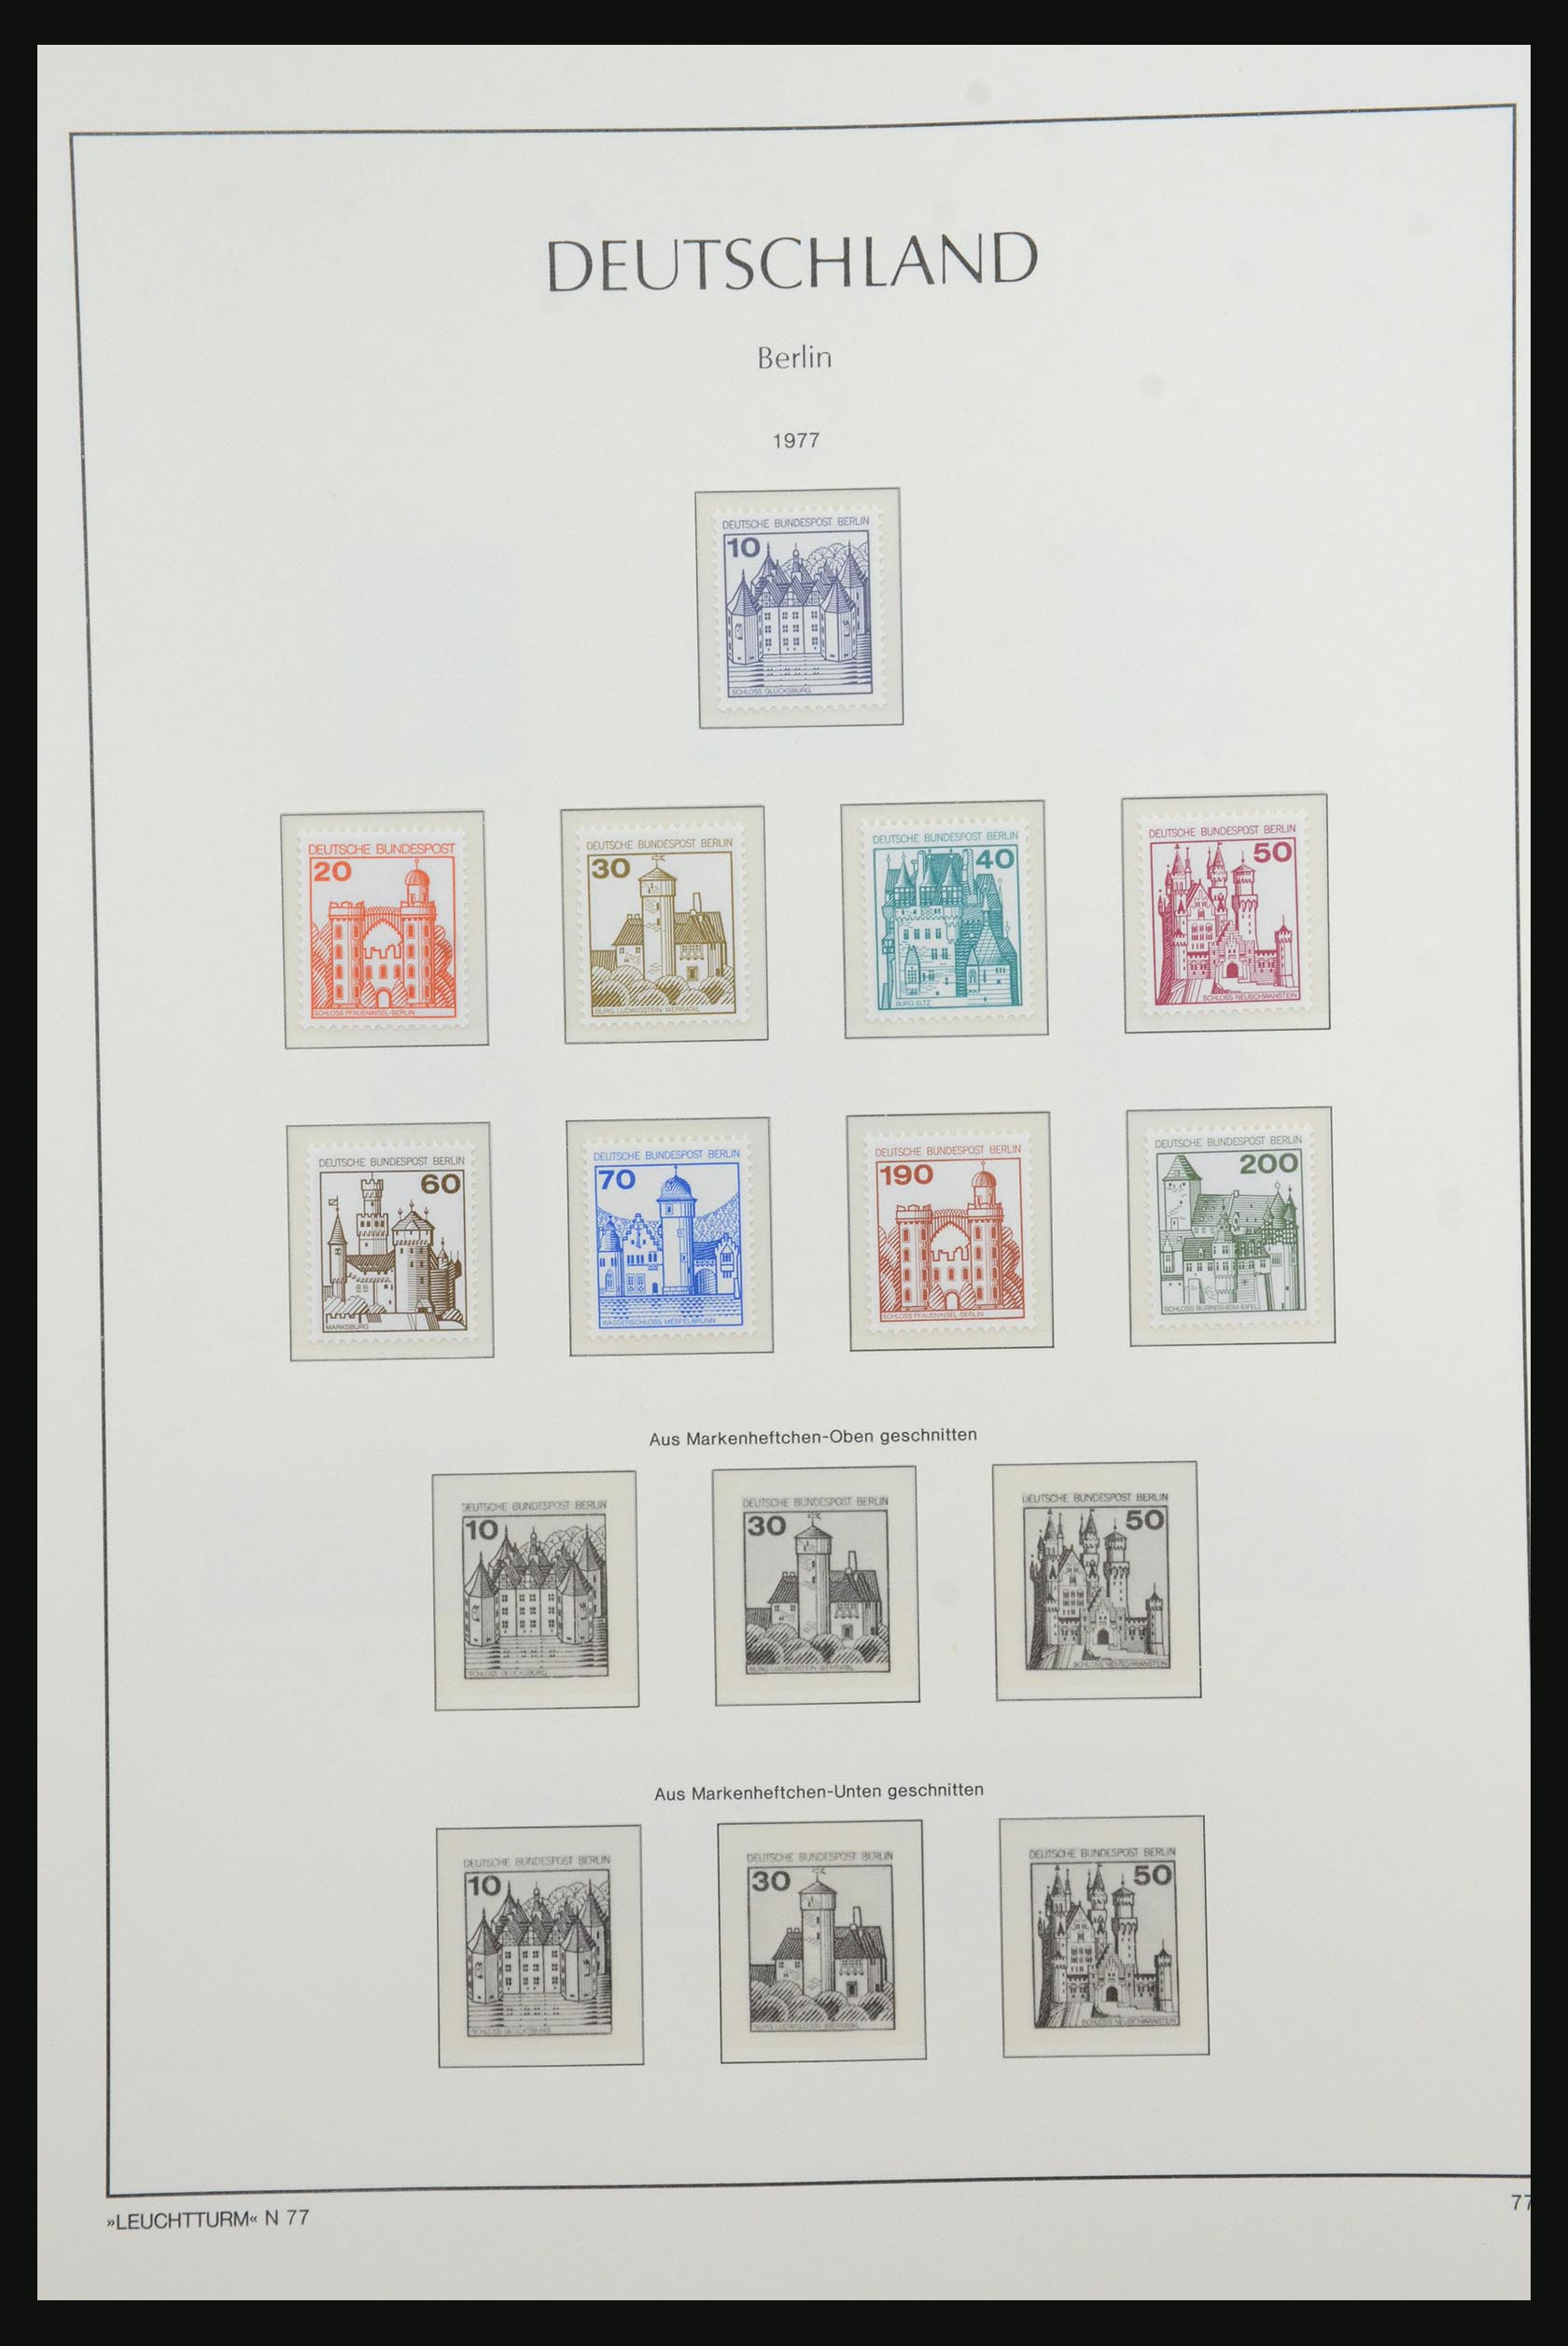 31601 050 - 31601 Bundespost, Berlin and Saar 1948-2008.